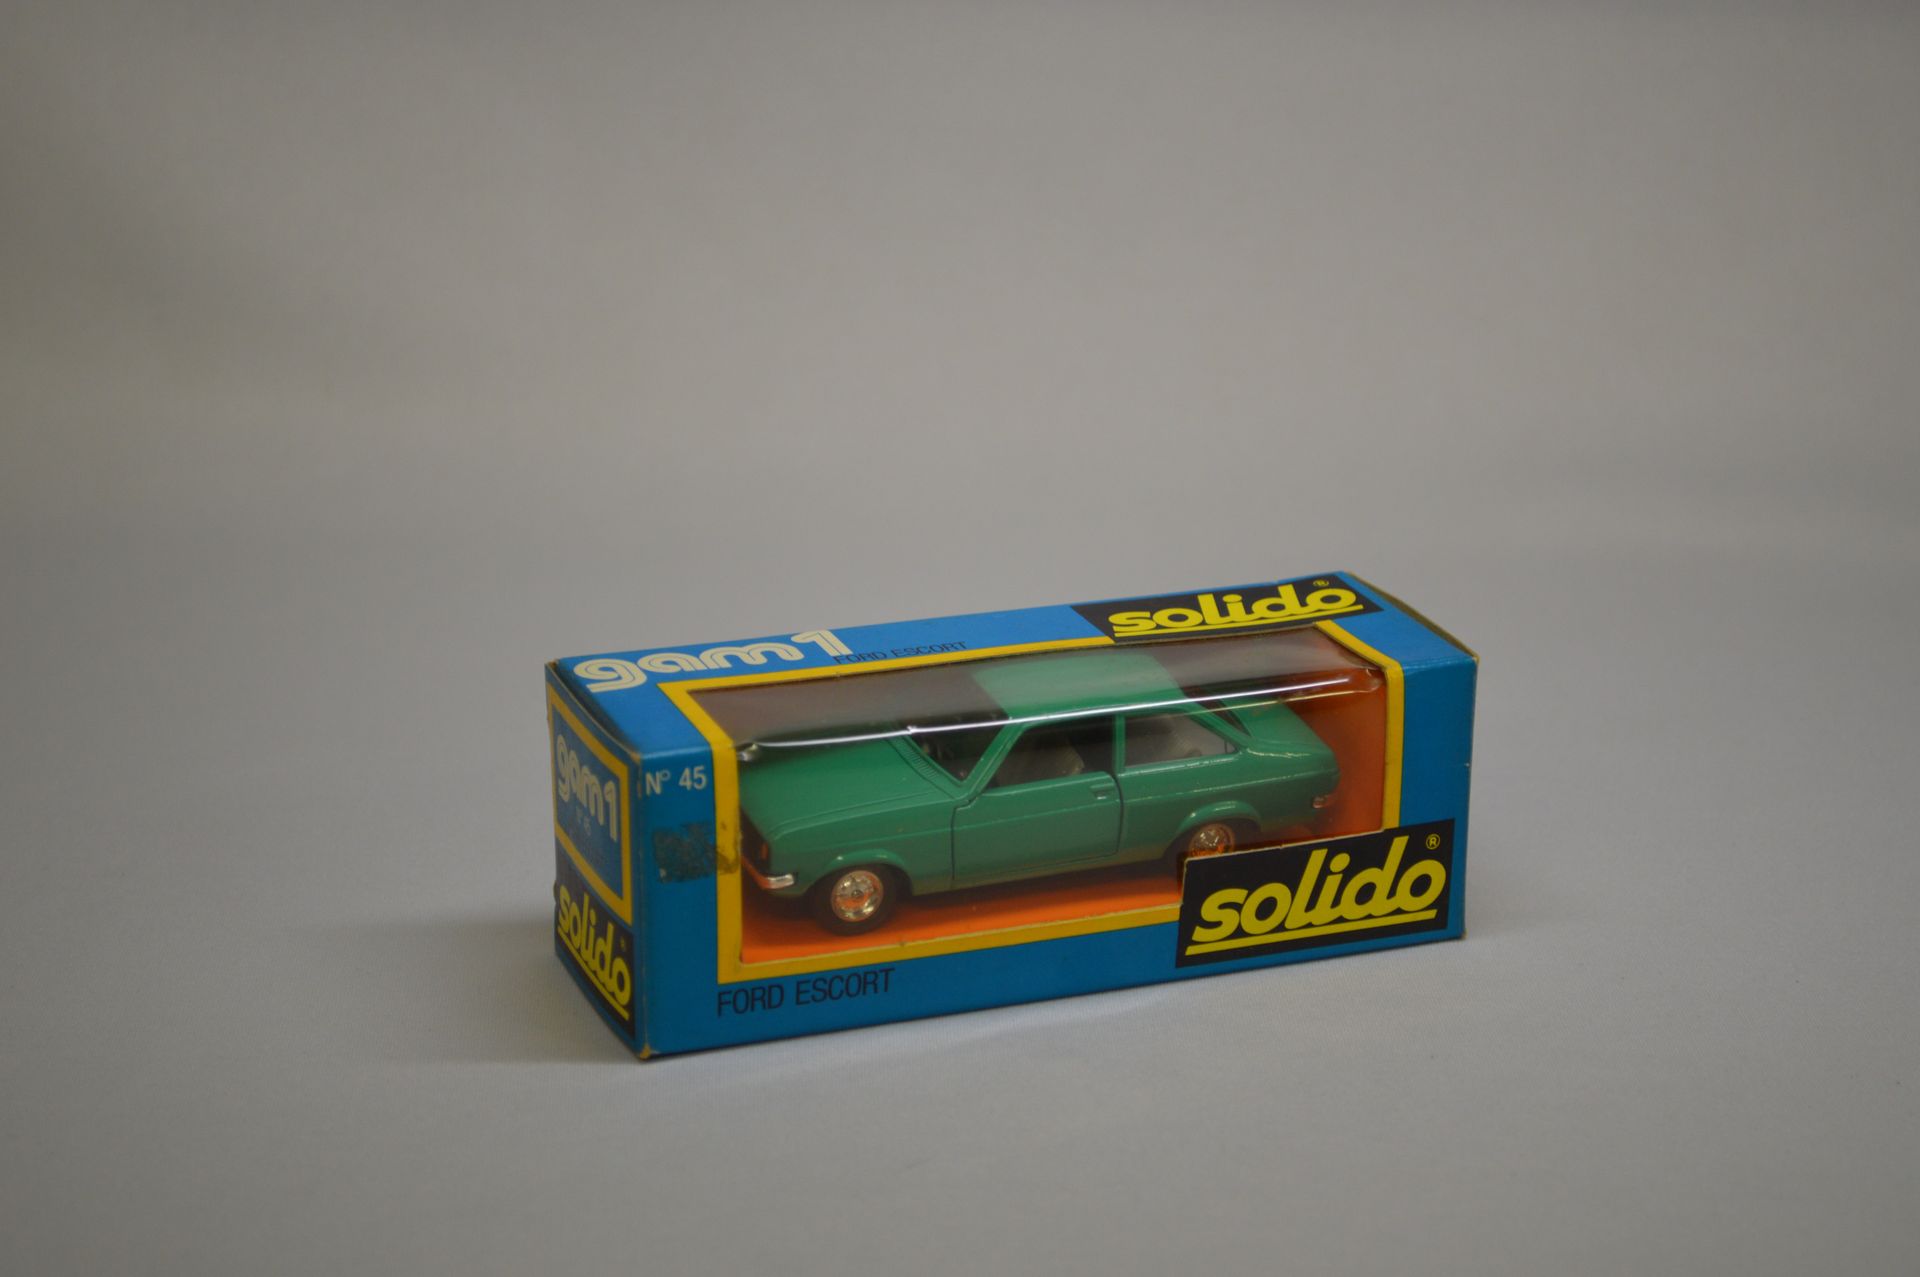 Null SOLIDO - GAM 1 - Touring car : Ford Escort, n° 45, green.

Original box. Pr&hellip;